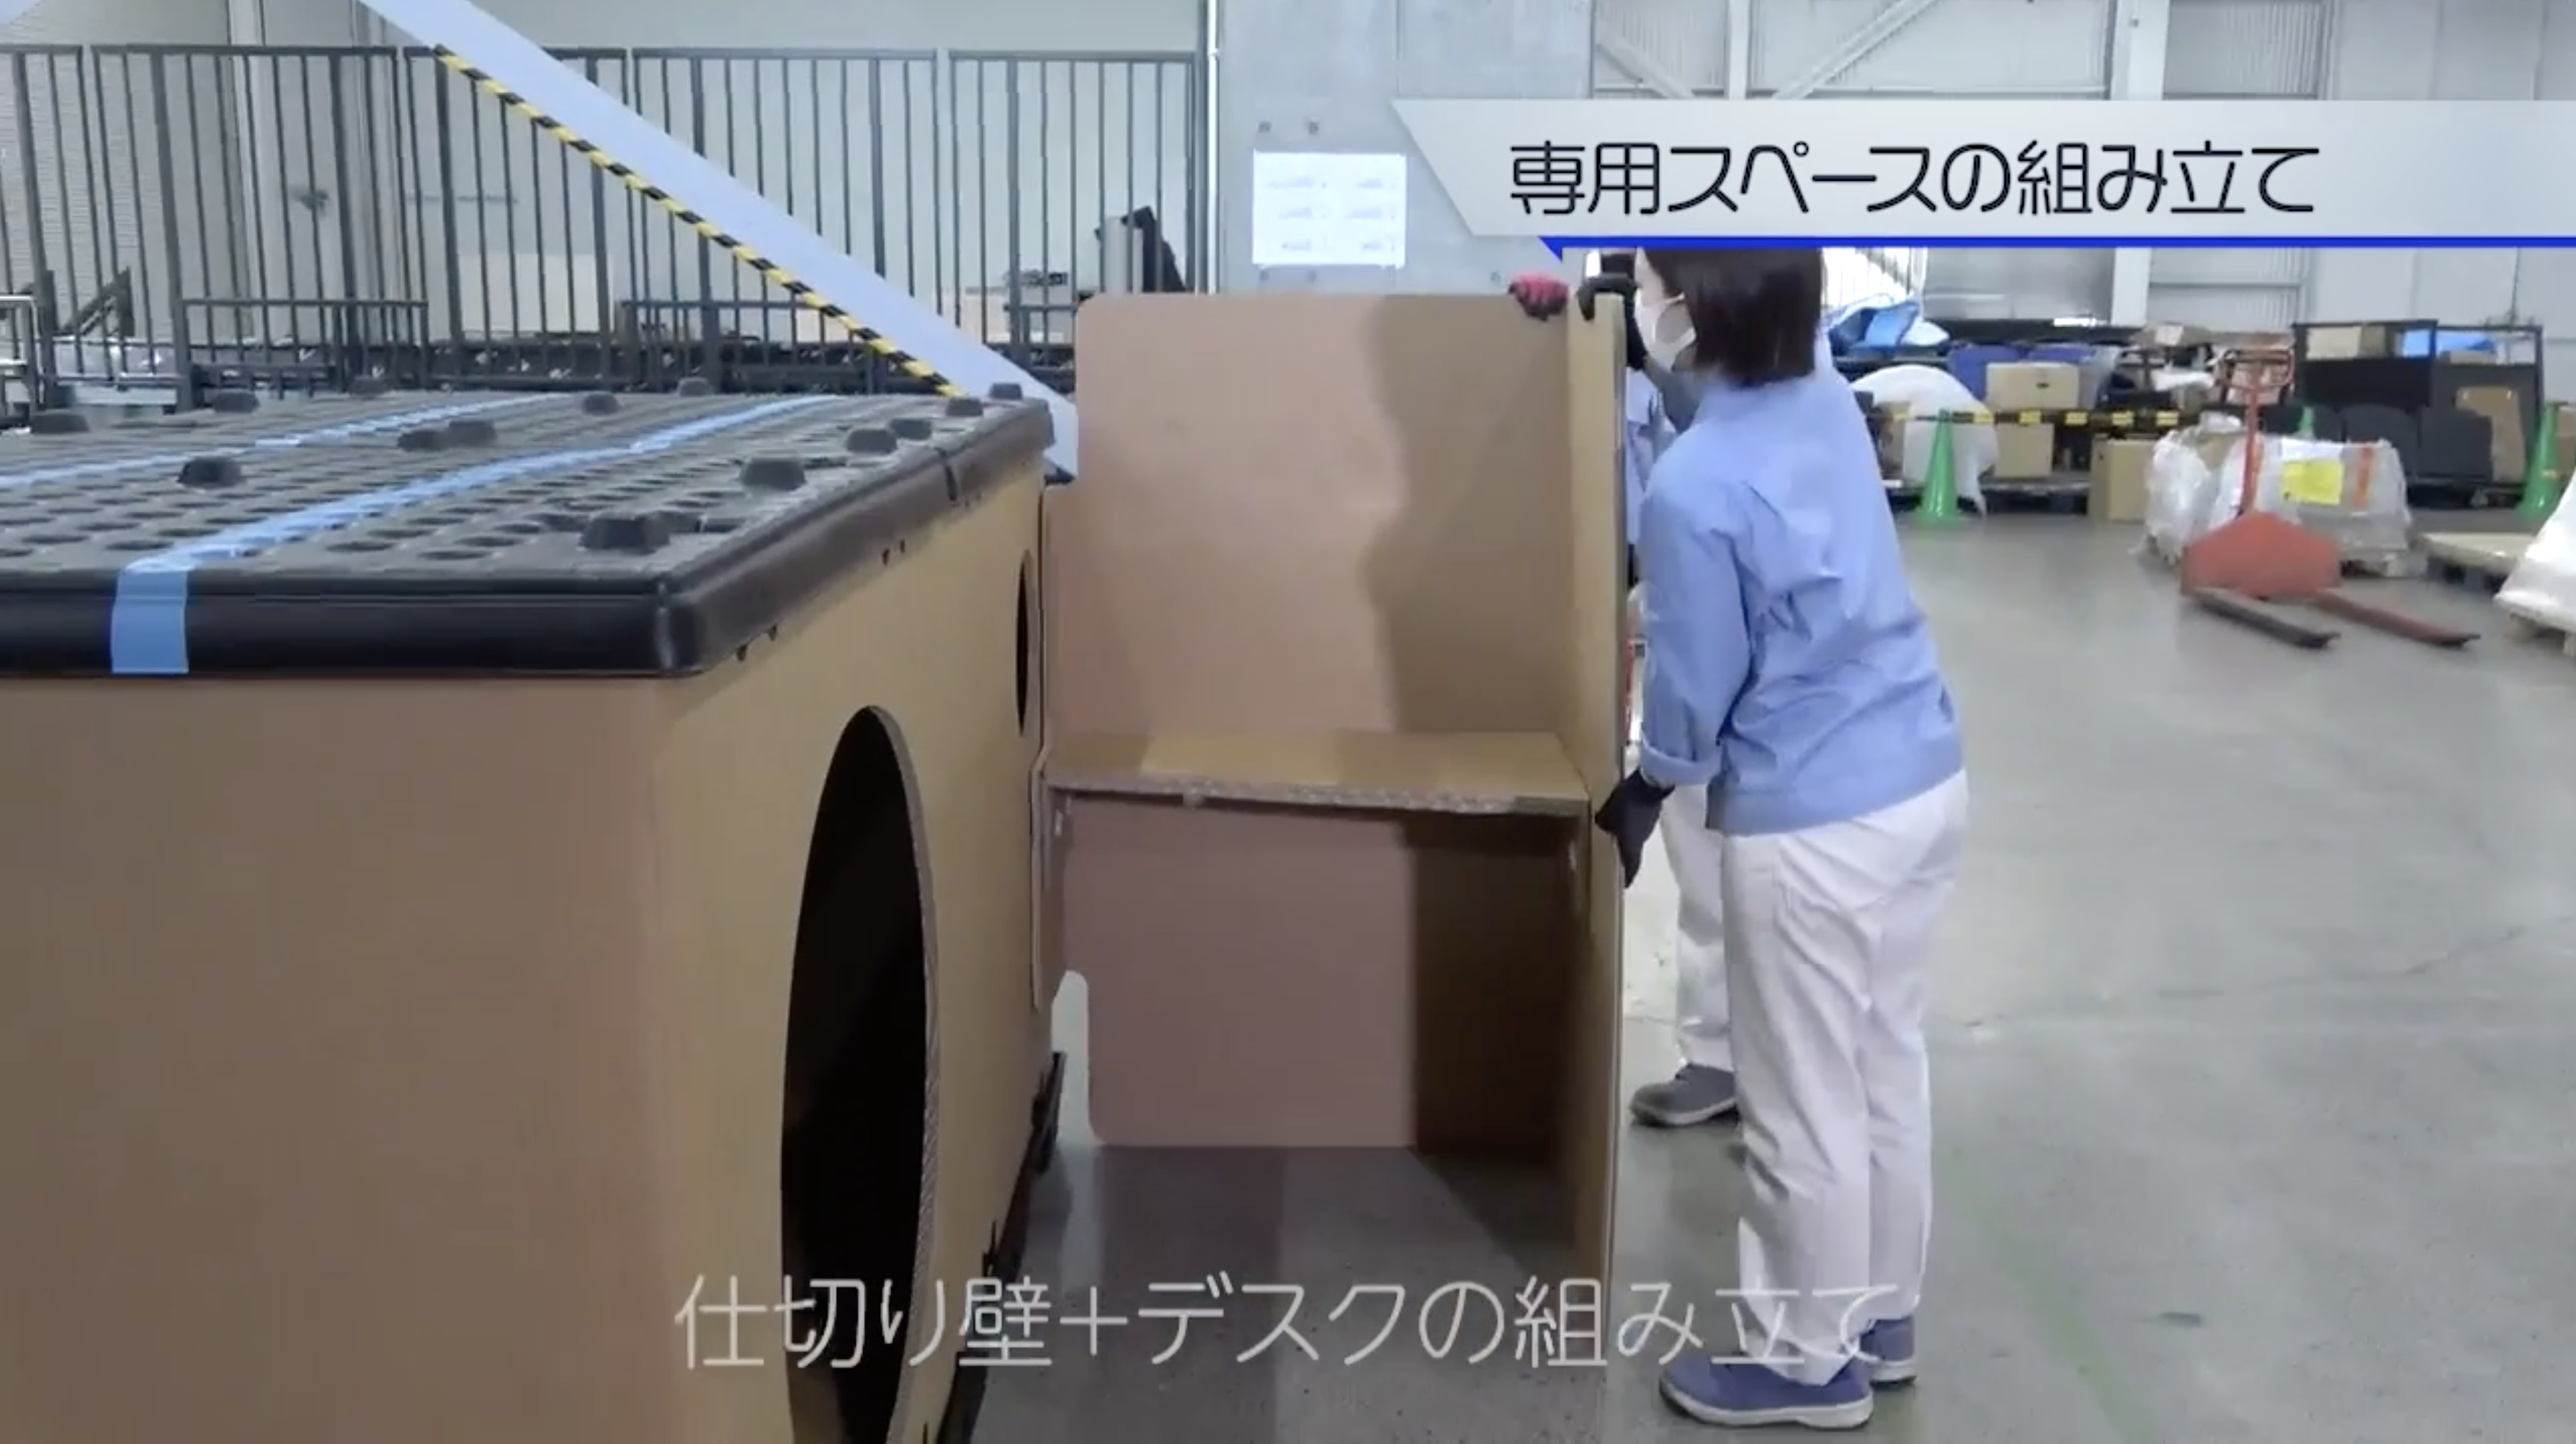 Kotobuki Cardboard Sleep Capsules - New solution for natural disasters